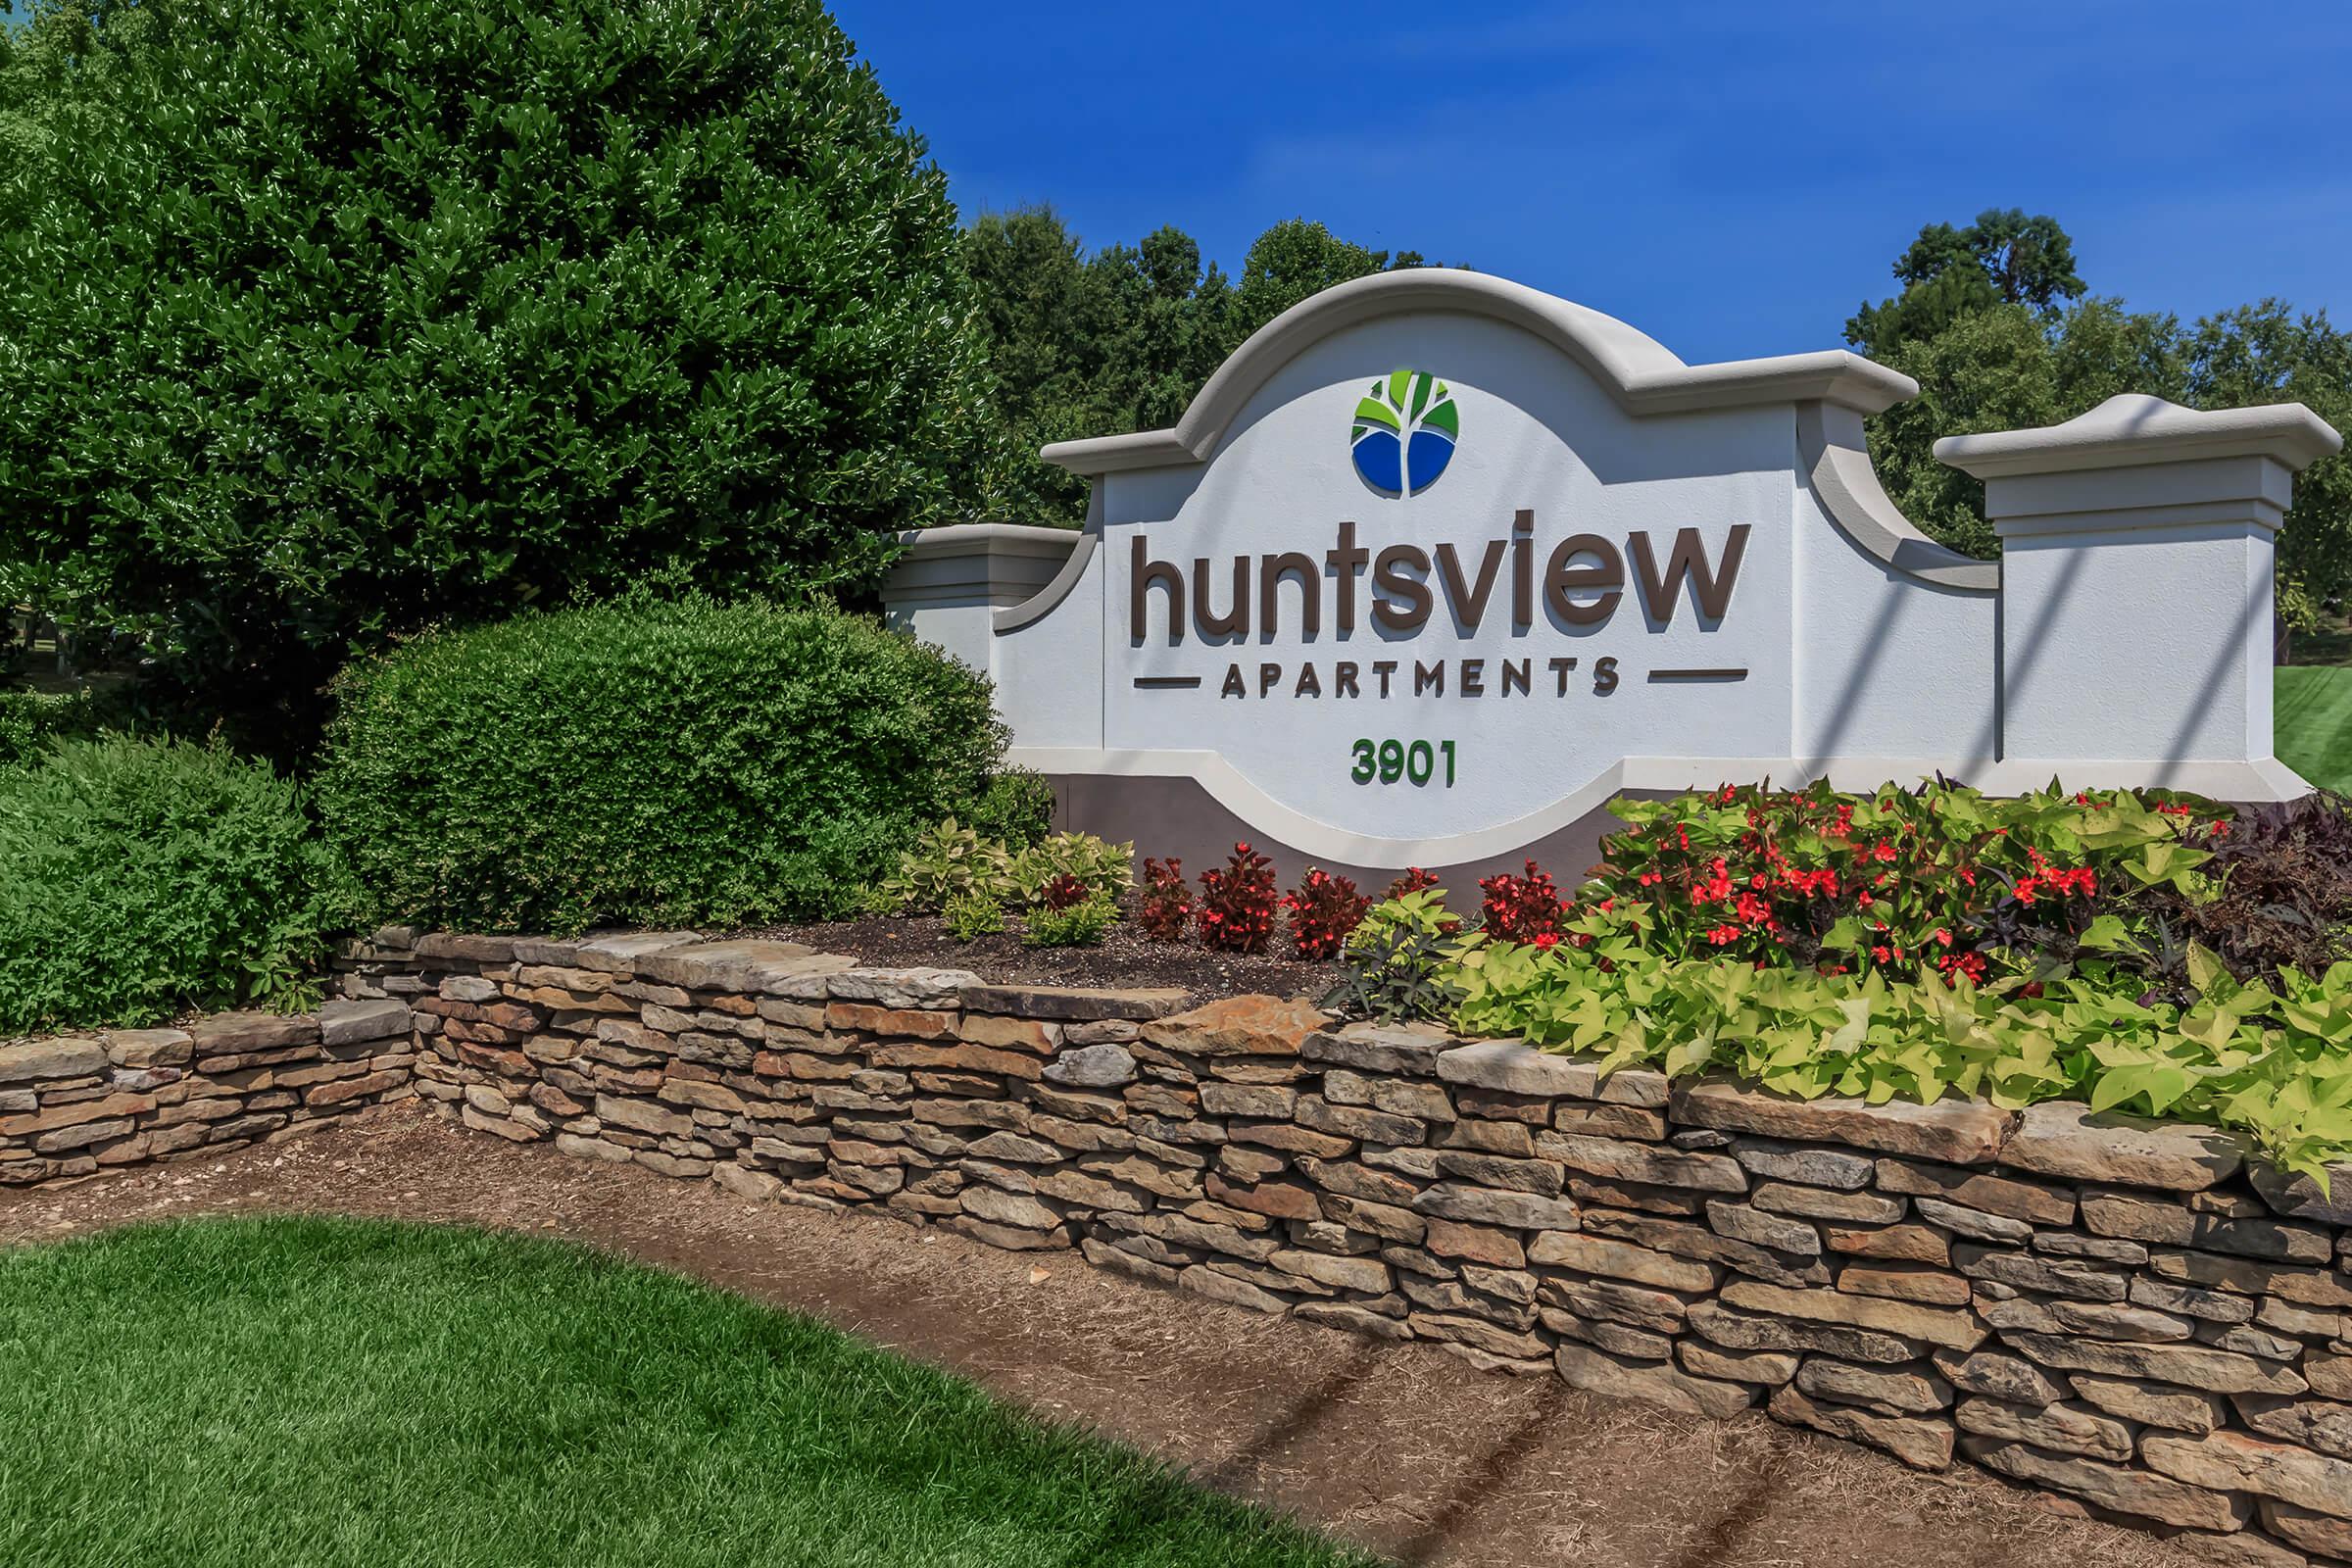 Huntsview Apartments Exterior - Huntsview Apartments - Greensboro - North Carolina